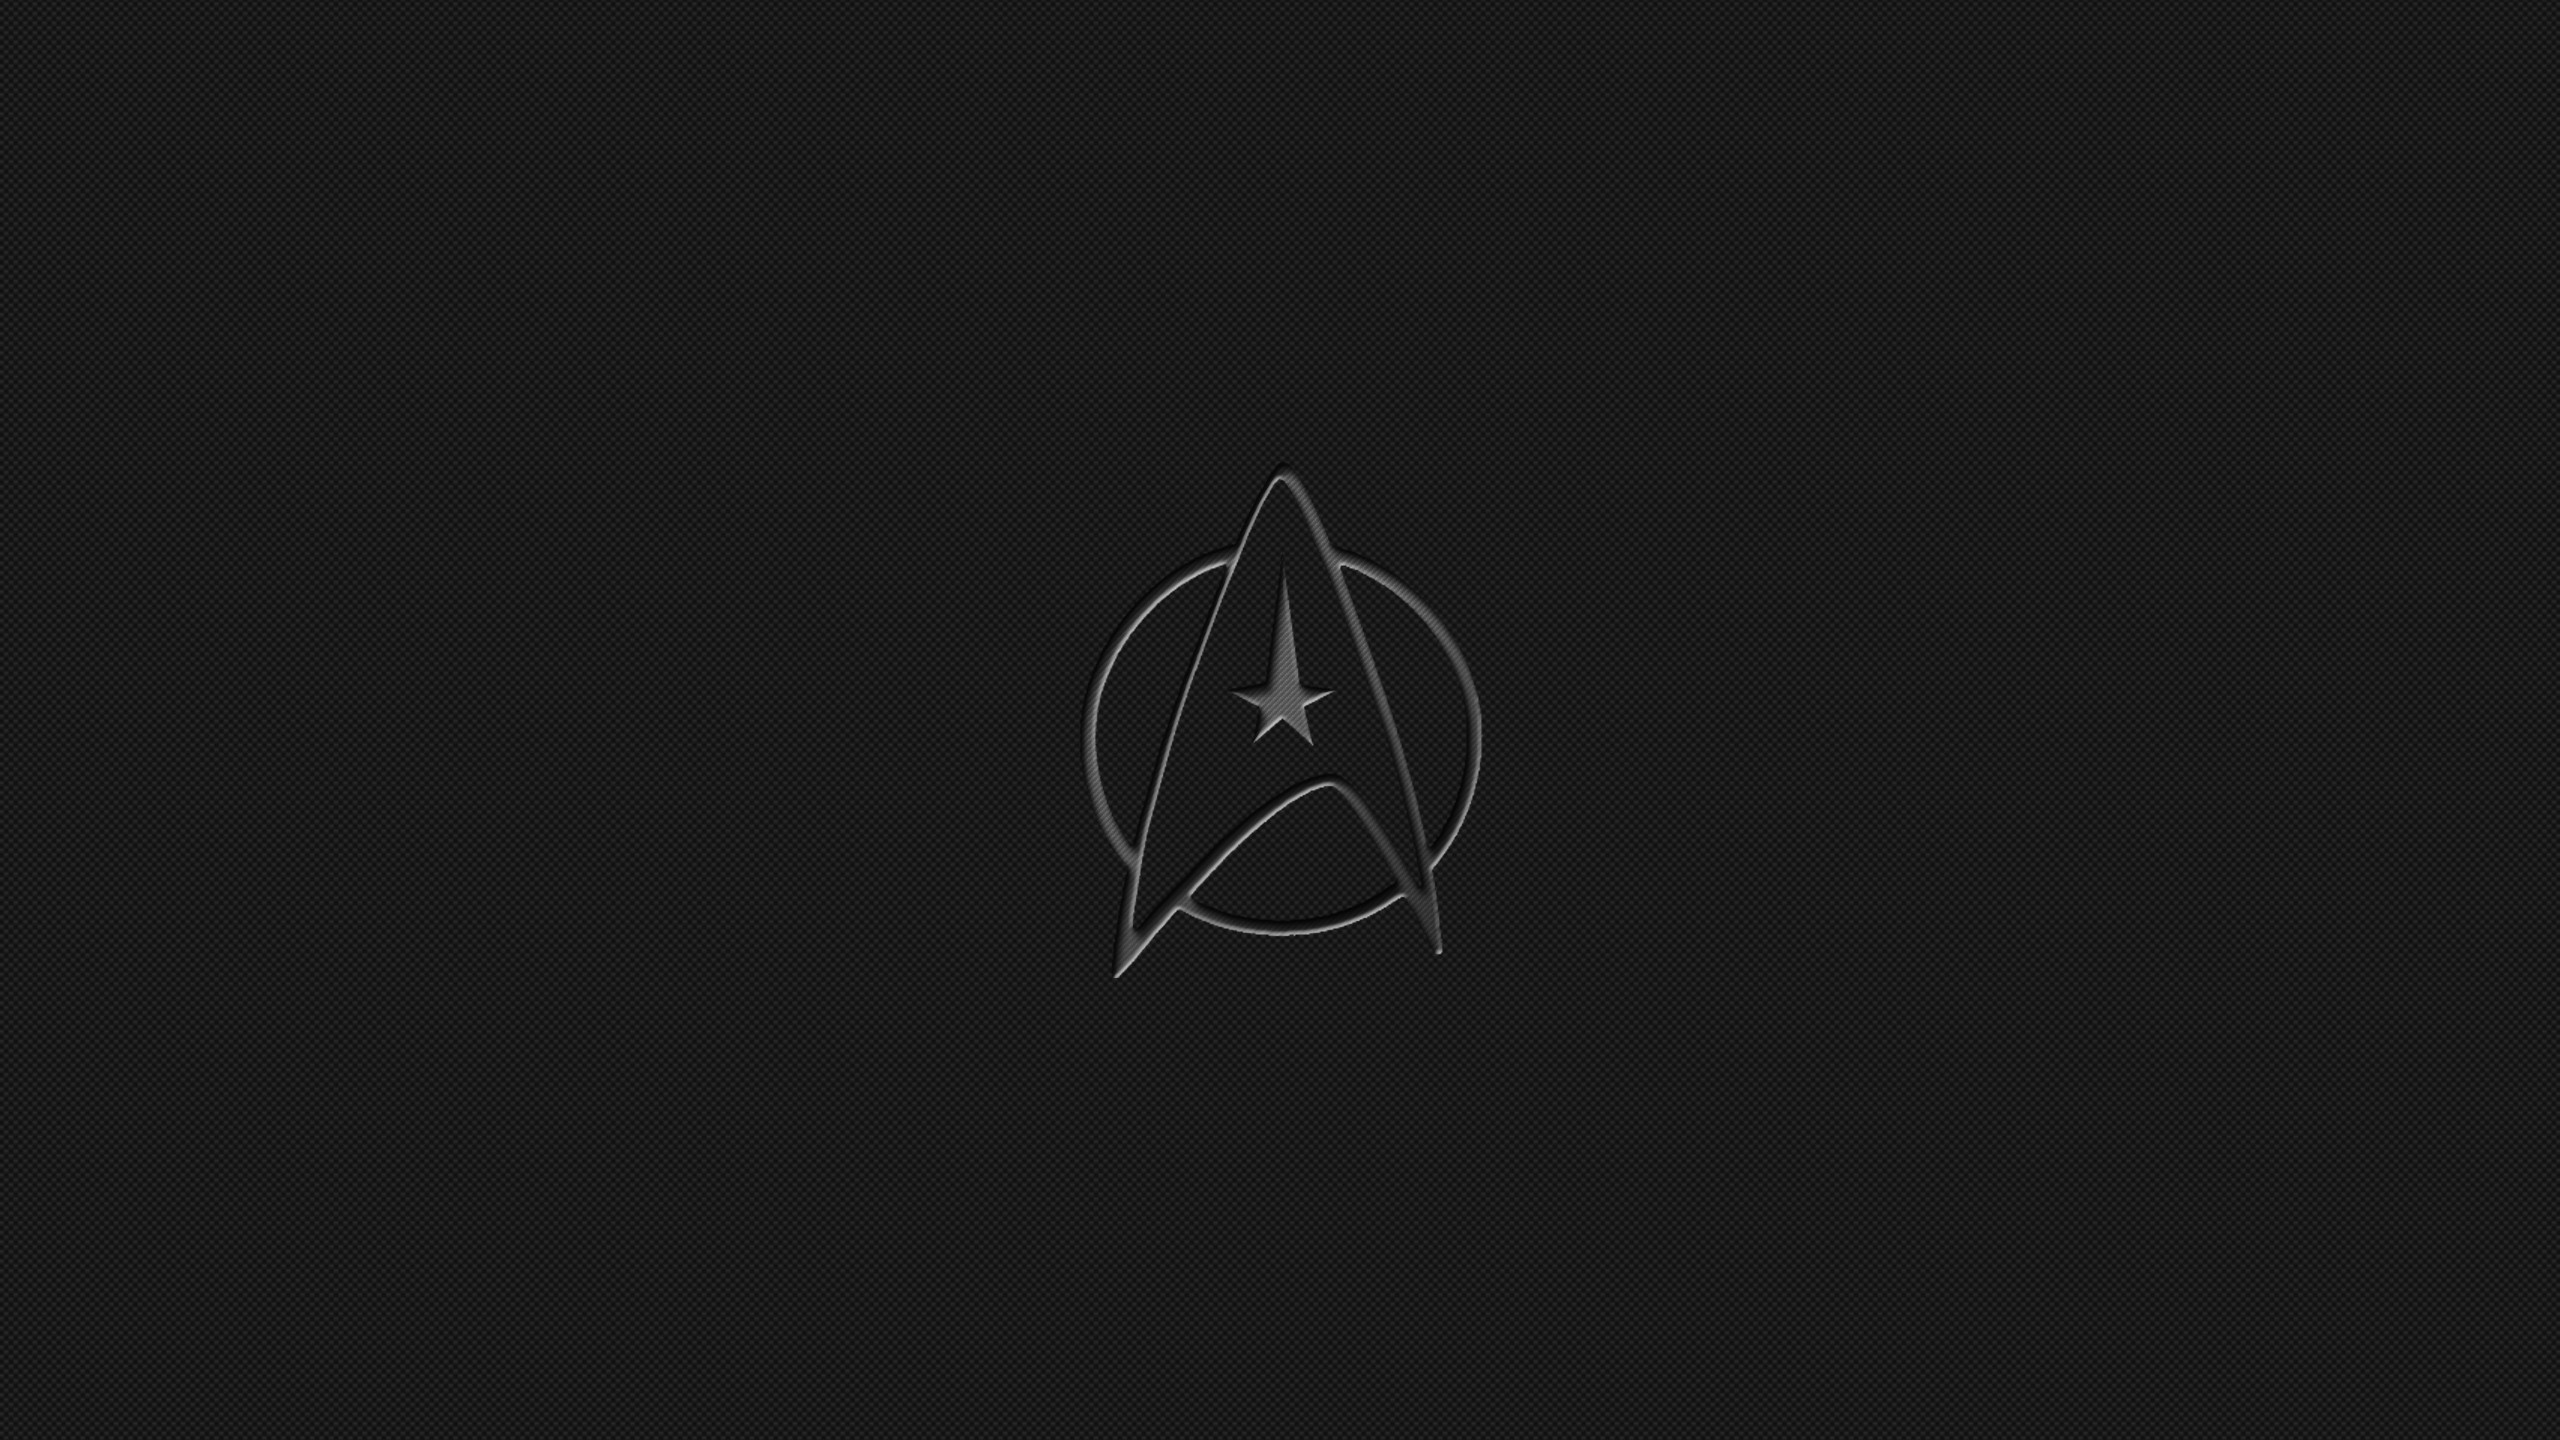 2560x1440 Star Trek Logo Desktop Background. Download  ...